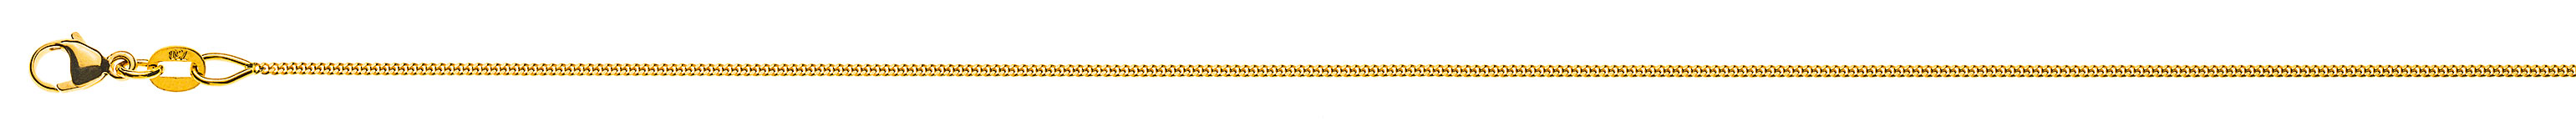 AURONOS Prestige Necklace yellow gold 18K curb chain polished 40cm 1.0mm